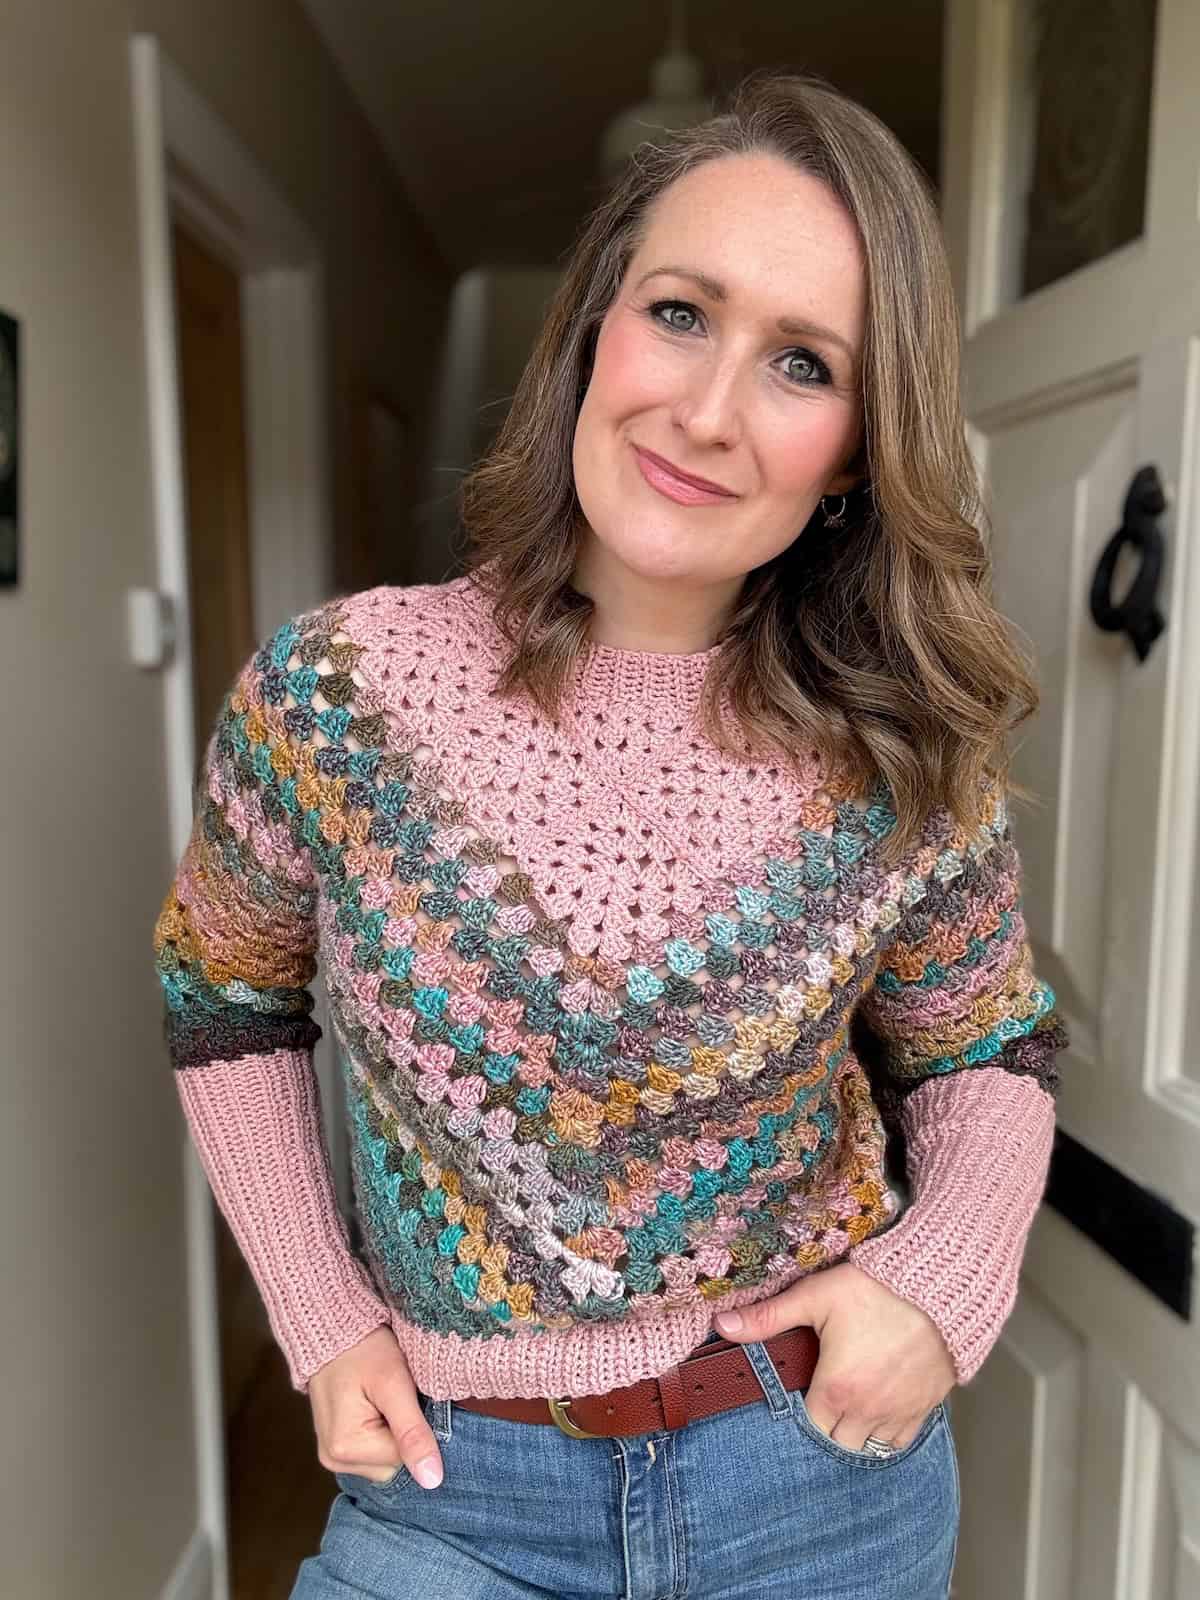 Granny Square Sweater Crochet Pattern – modern and fun